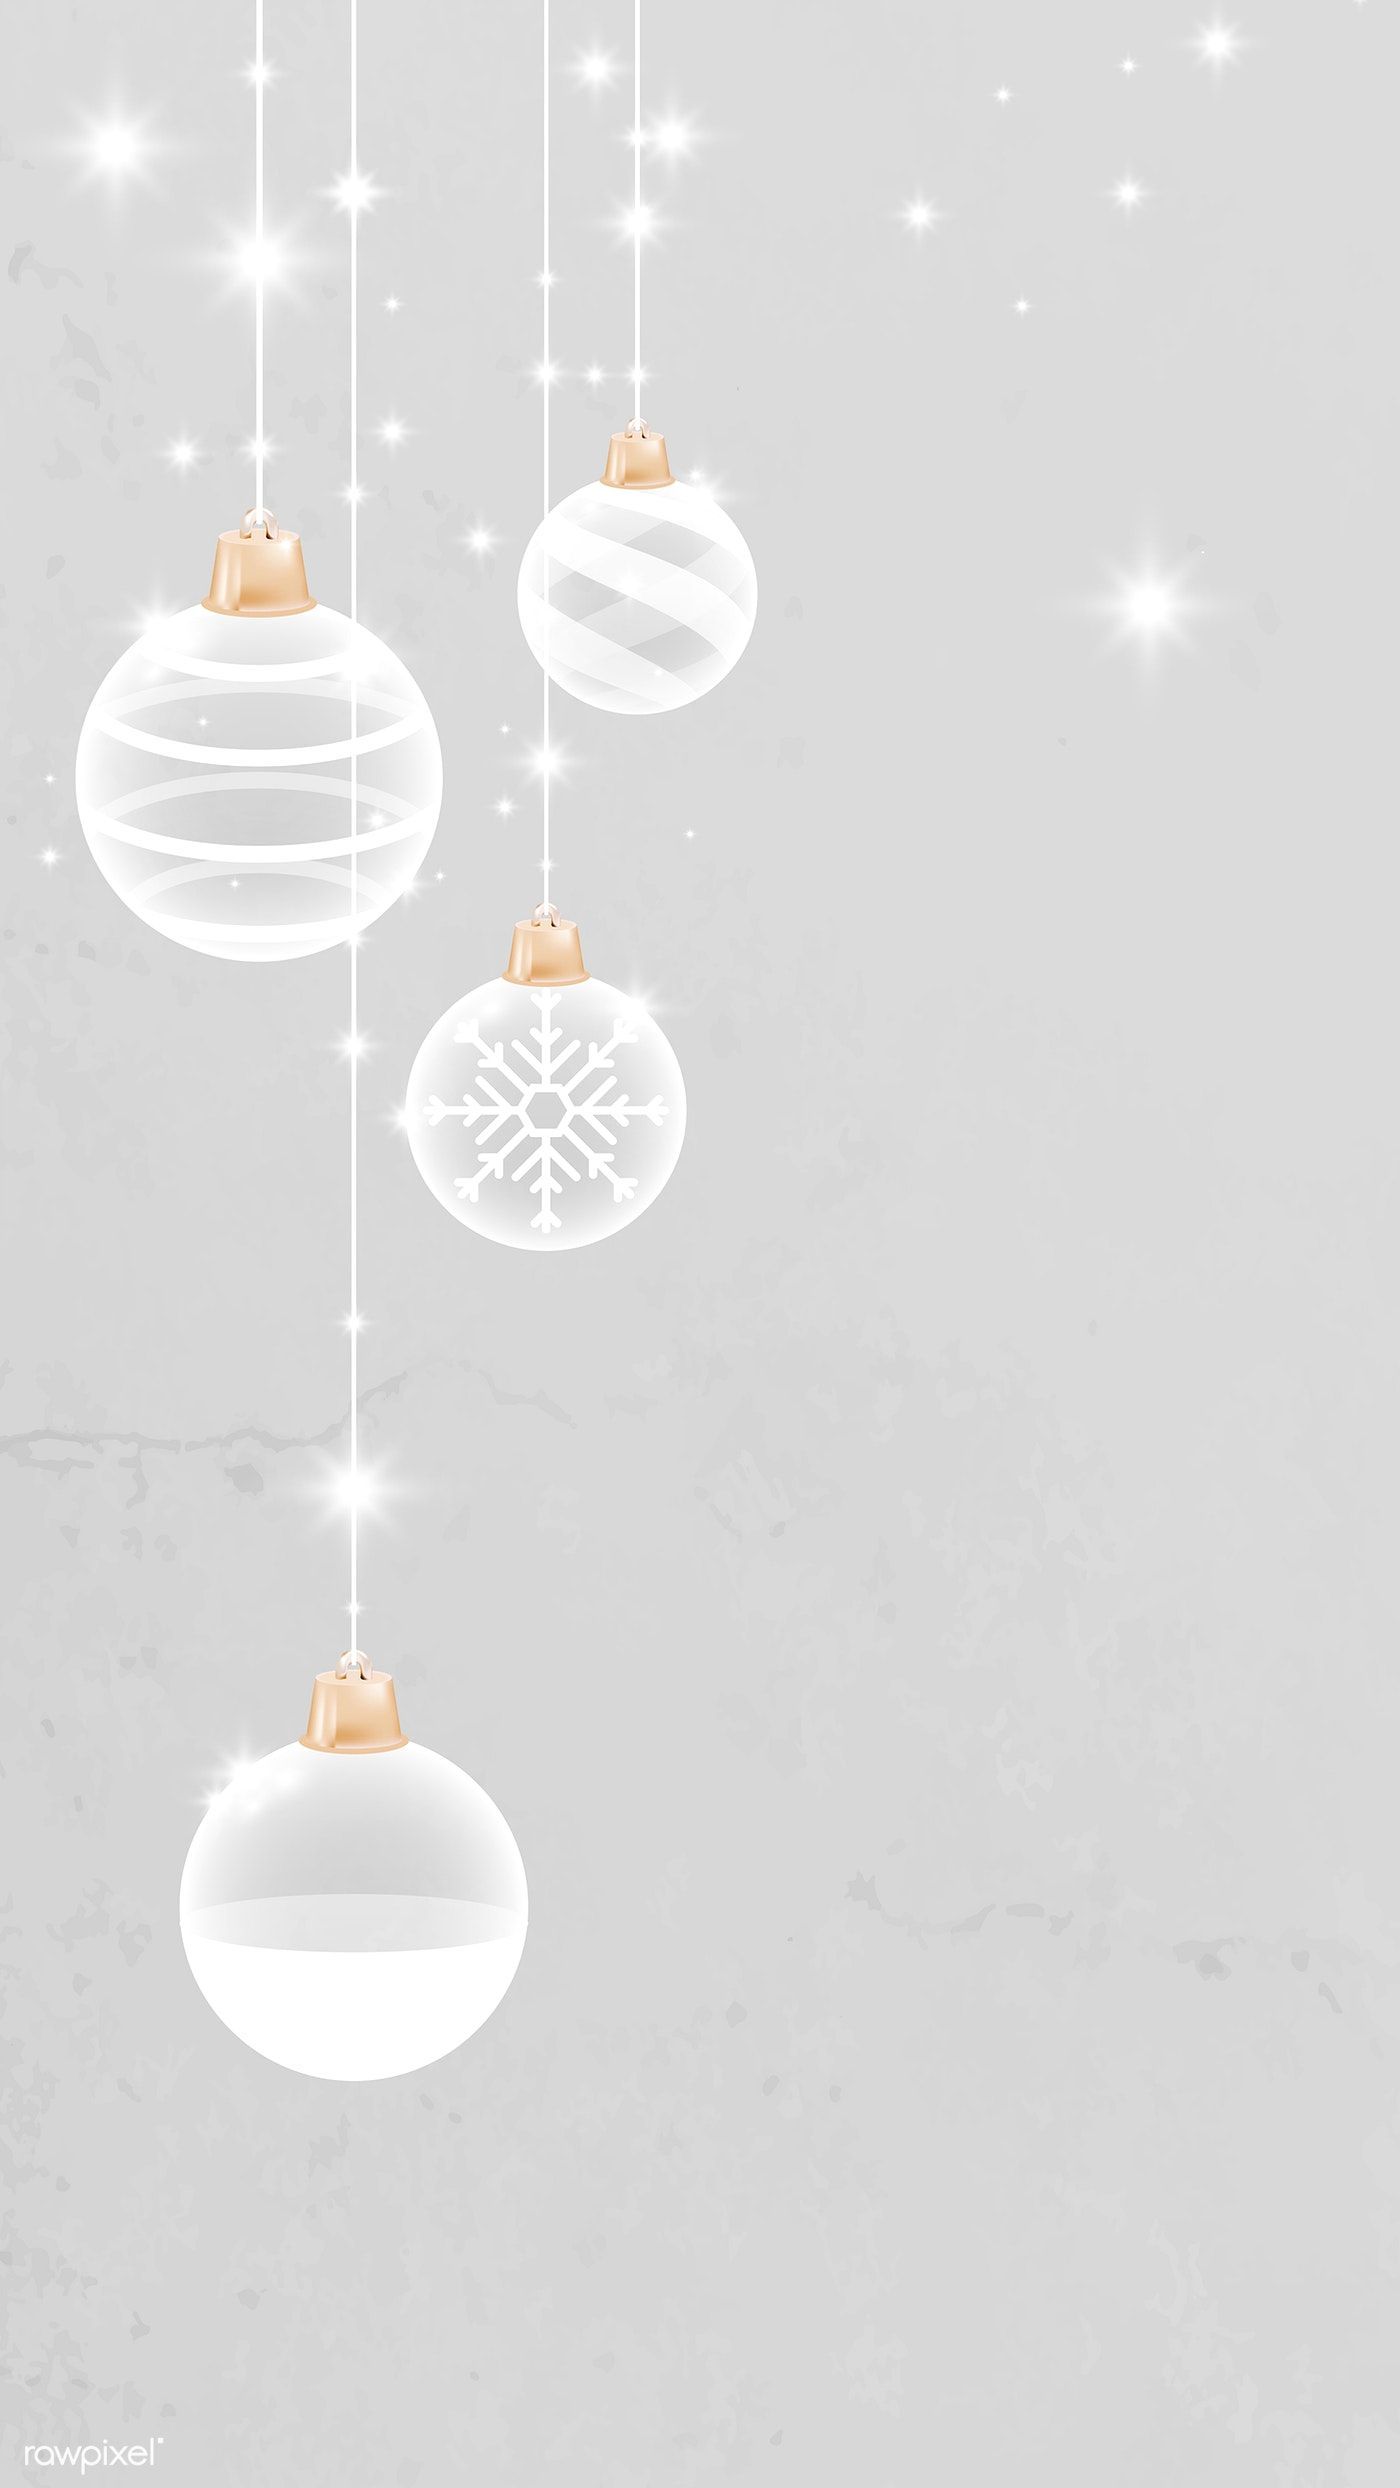 White Christmas bauble patterned on gray mobile phone wallpaper vector. premium imag. Christmas phone wallpaper, Christmas phone background, Christmas wallpaper